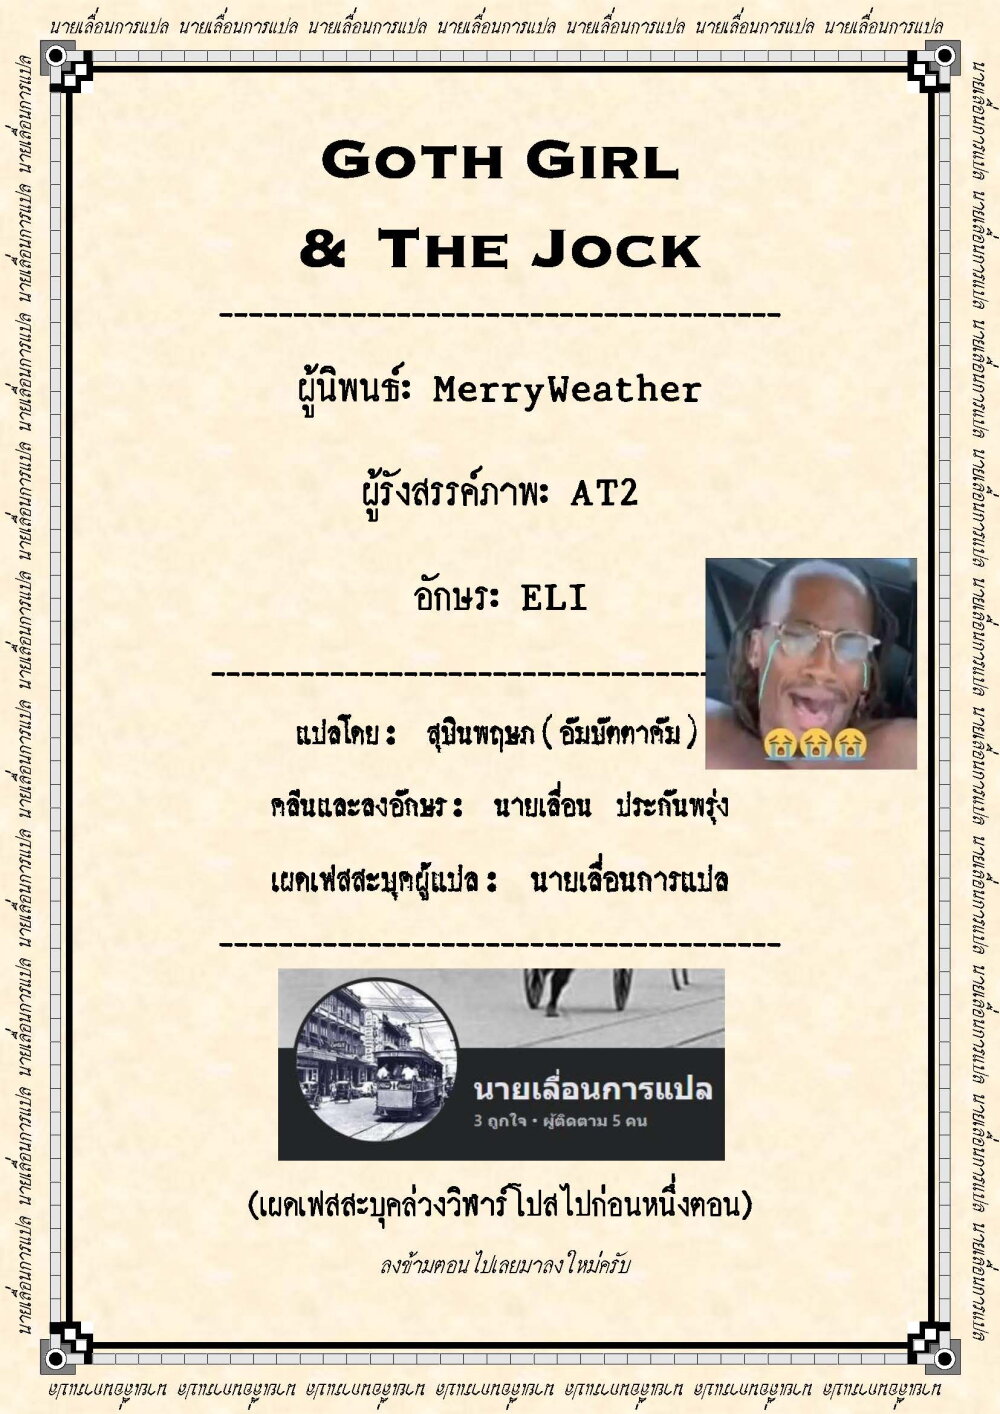 Goth Girl & The Jock 16 11